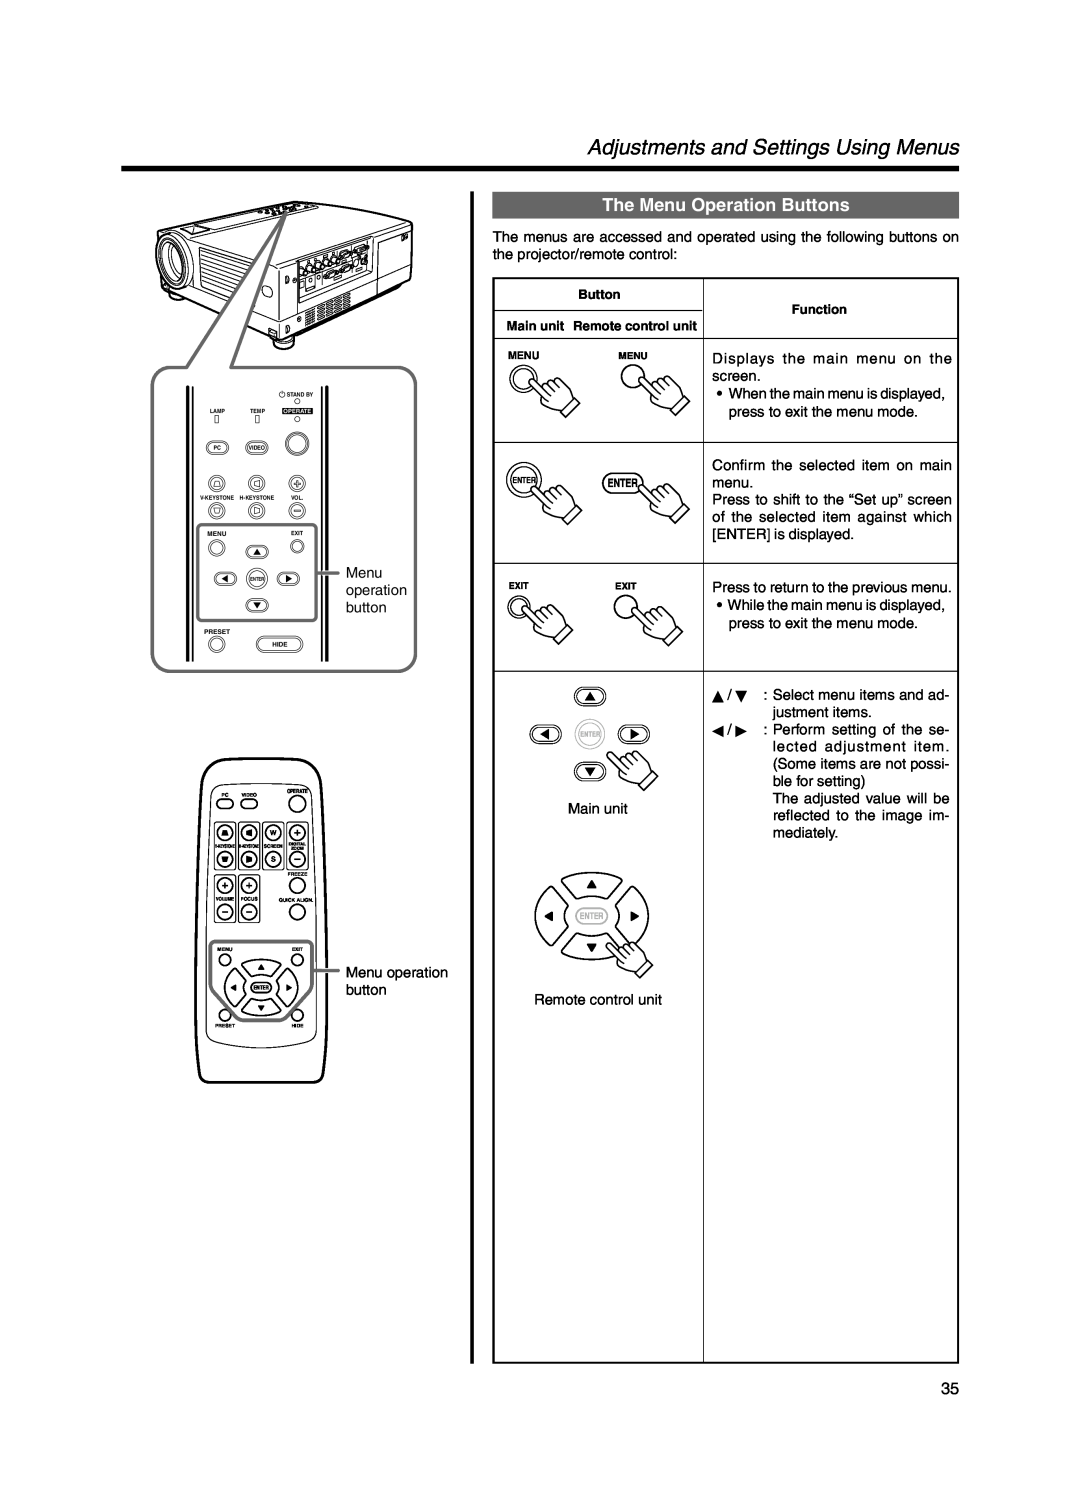 JVC Model DLA-HX1E manual The Menu Operation Buttons, Adjustments and Settings Using Menus, button 